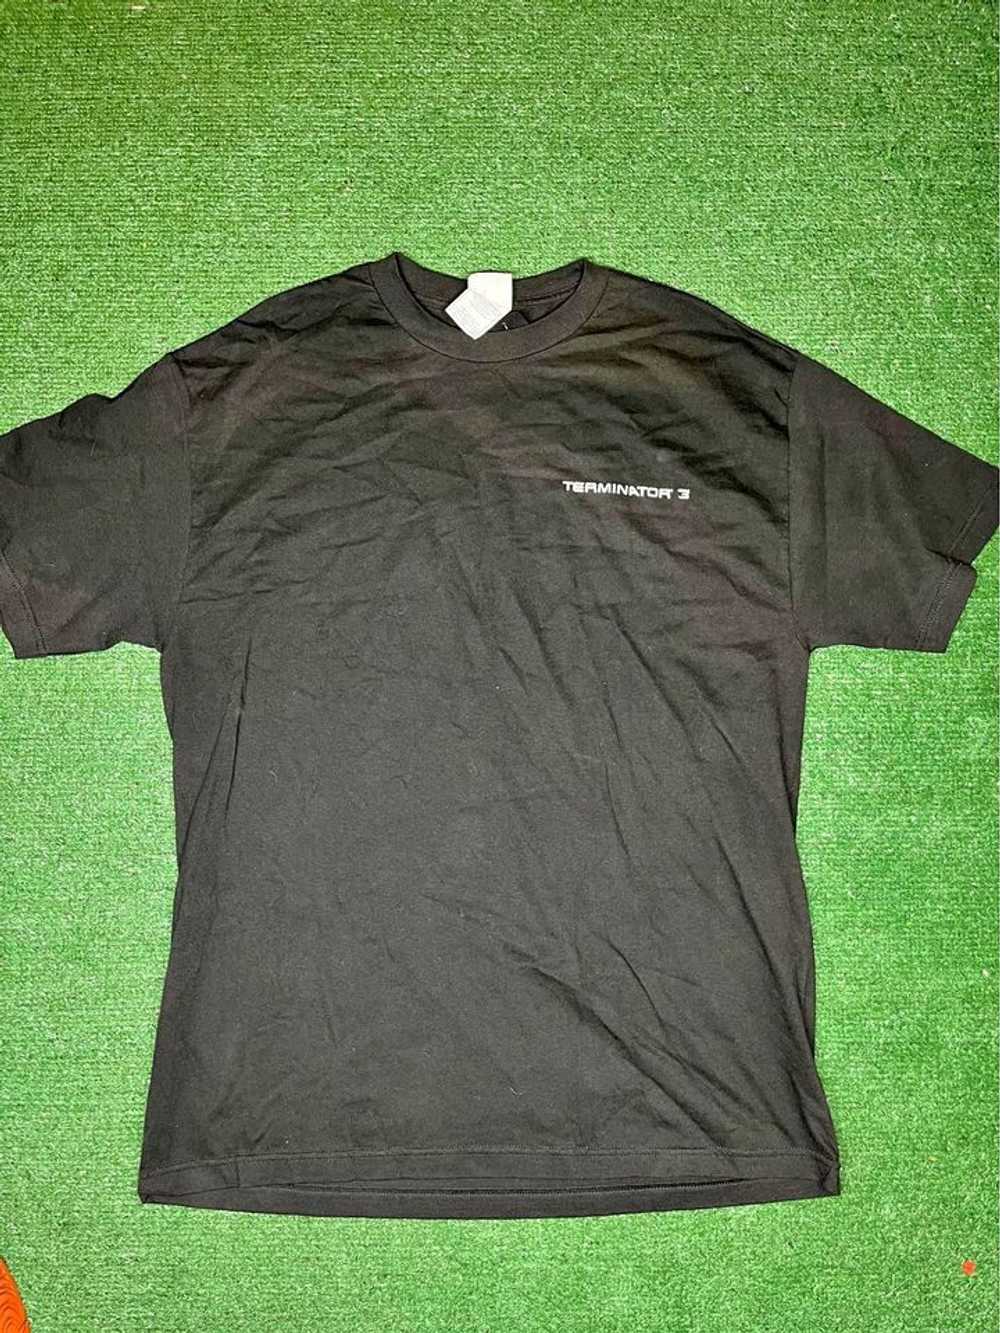 Vintage Vintage Terminator 3 T-shirt Size XL - image 1